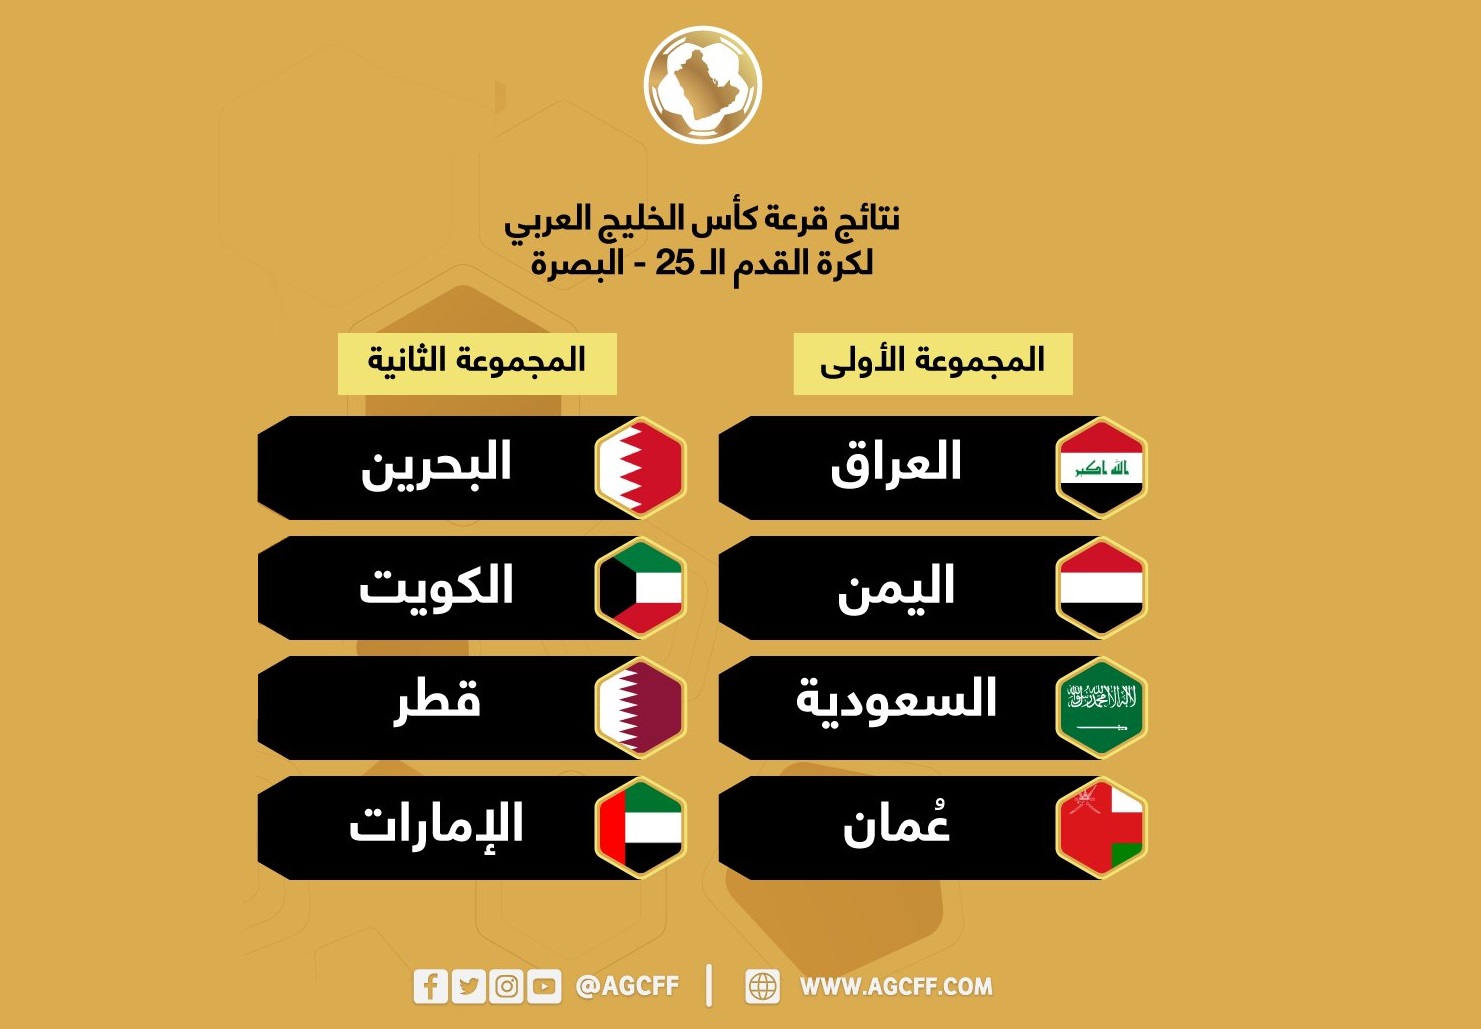 2023 Gulf Cup: Qatar to face Kuwait, Bahrain, and UAE